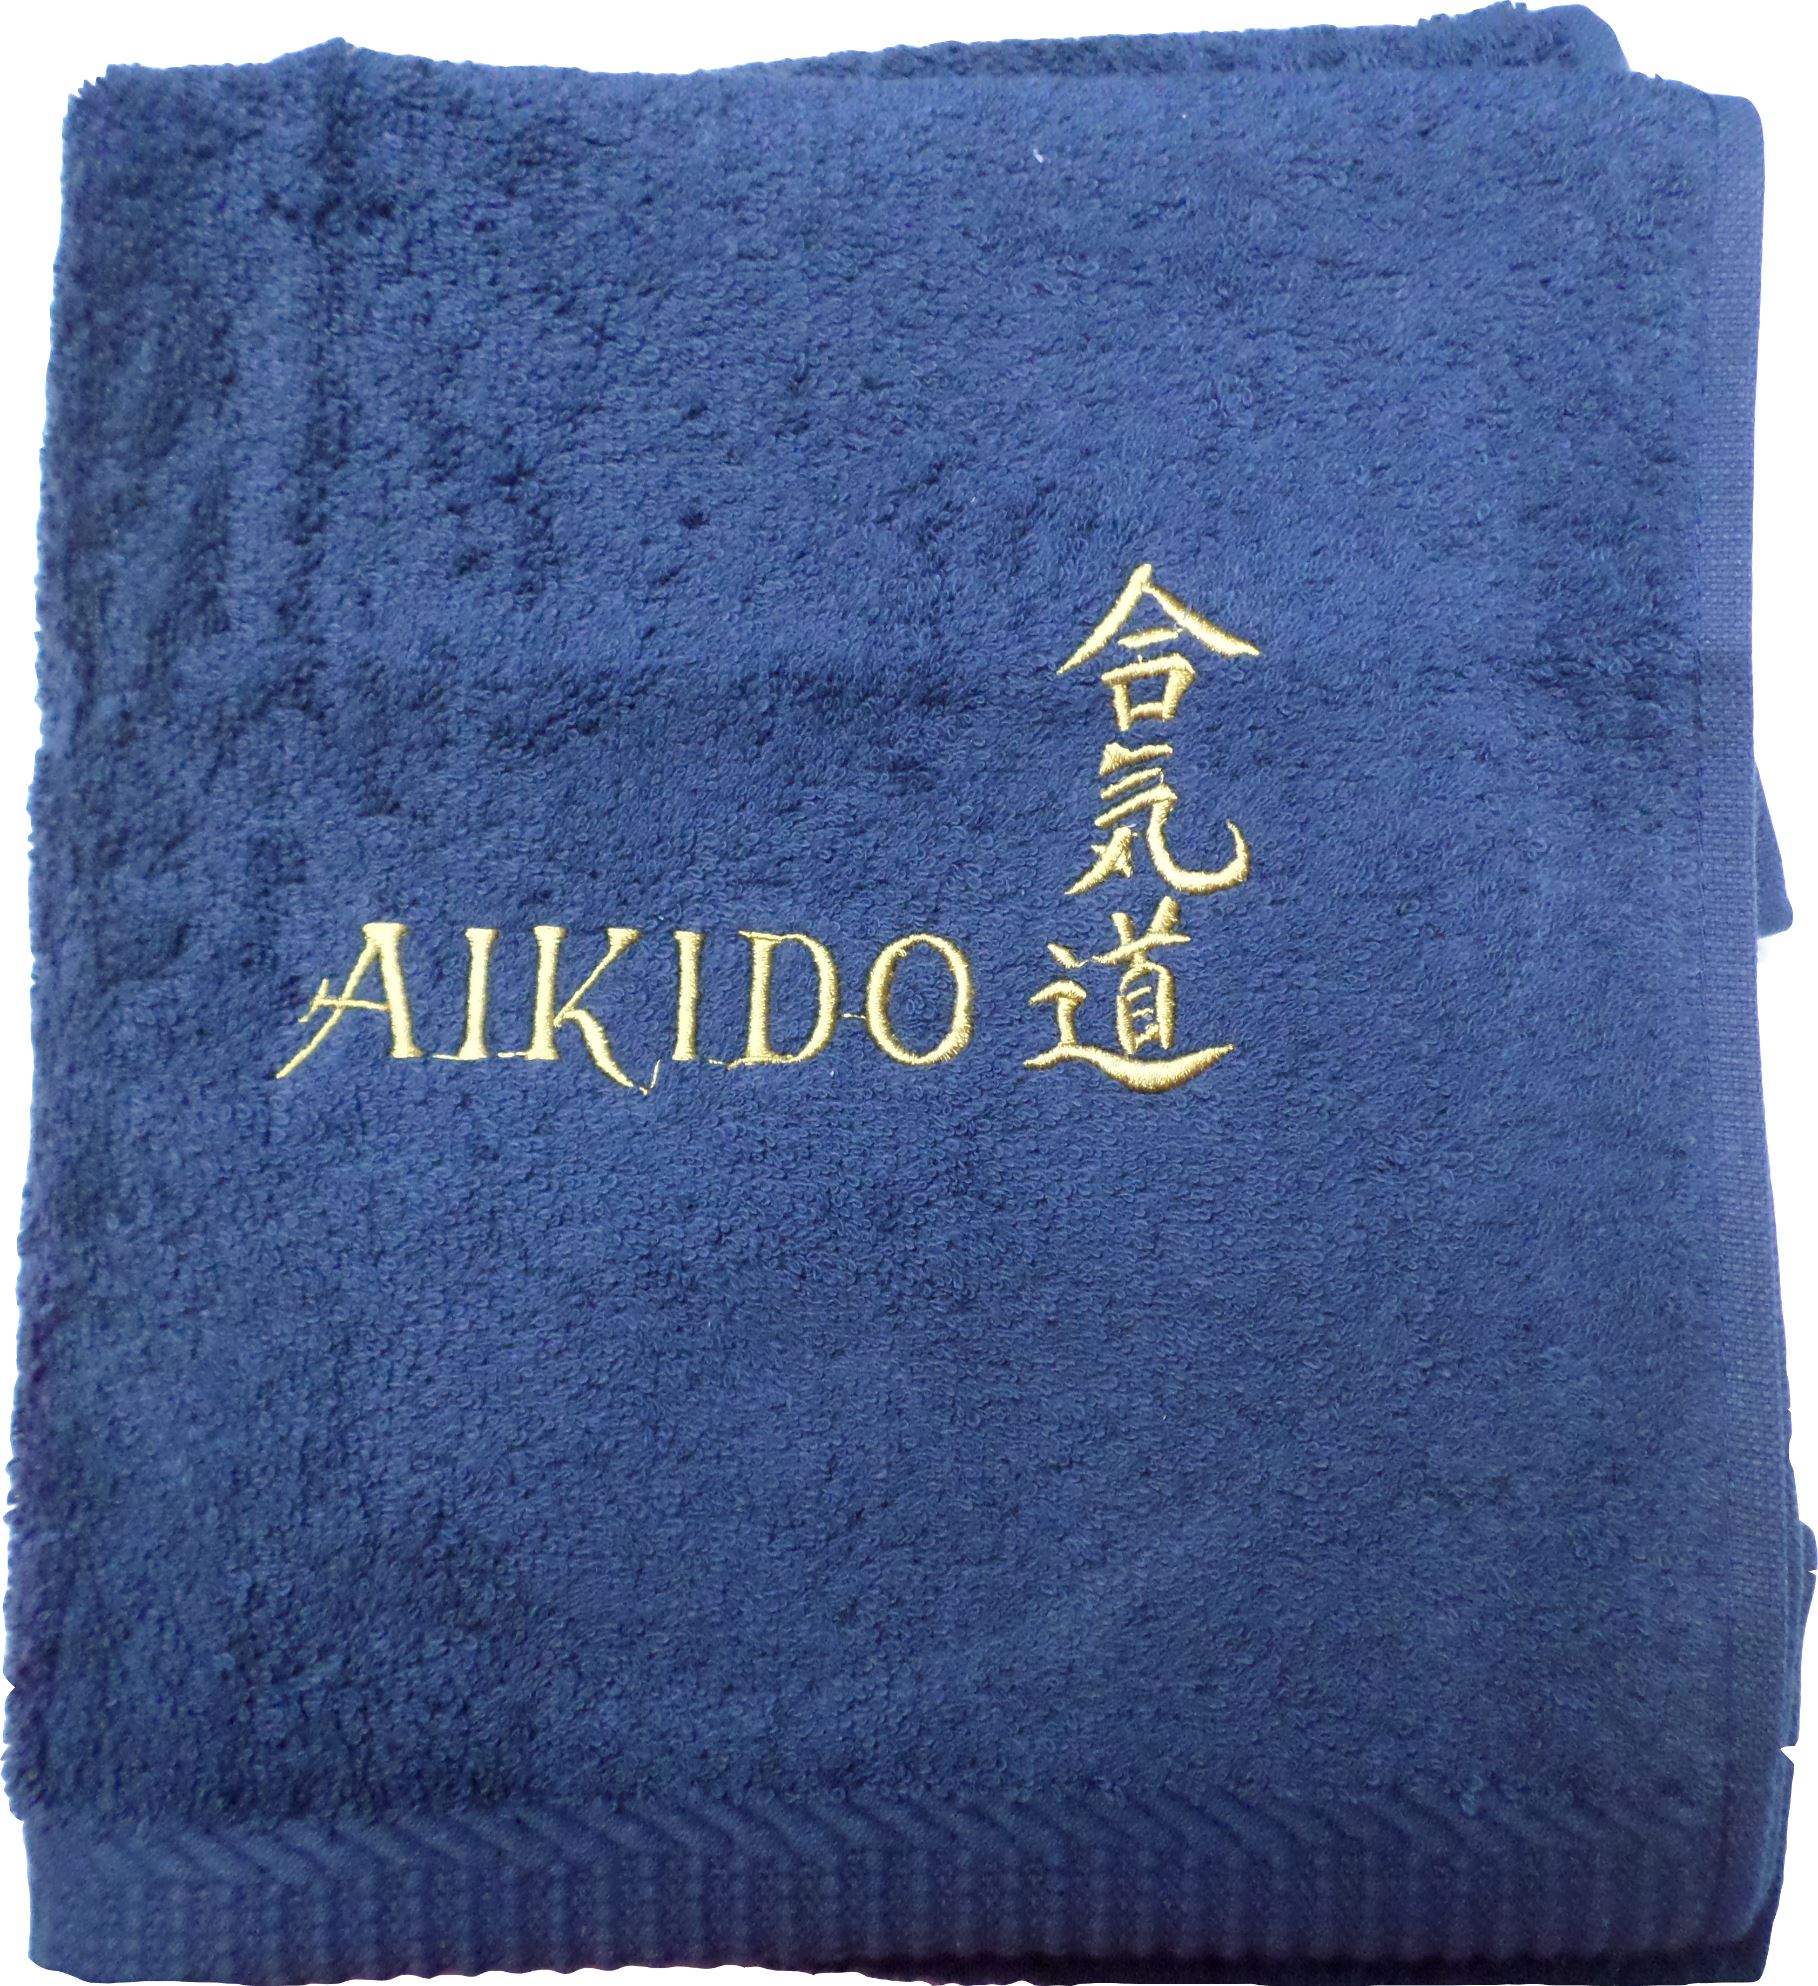 Handtuch / Duschtuch blau, bestickt Schrift / Zeichen Aikido